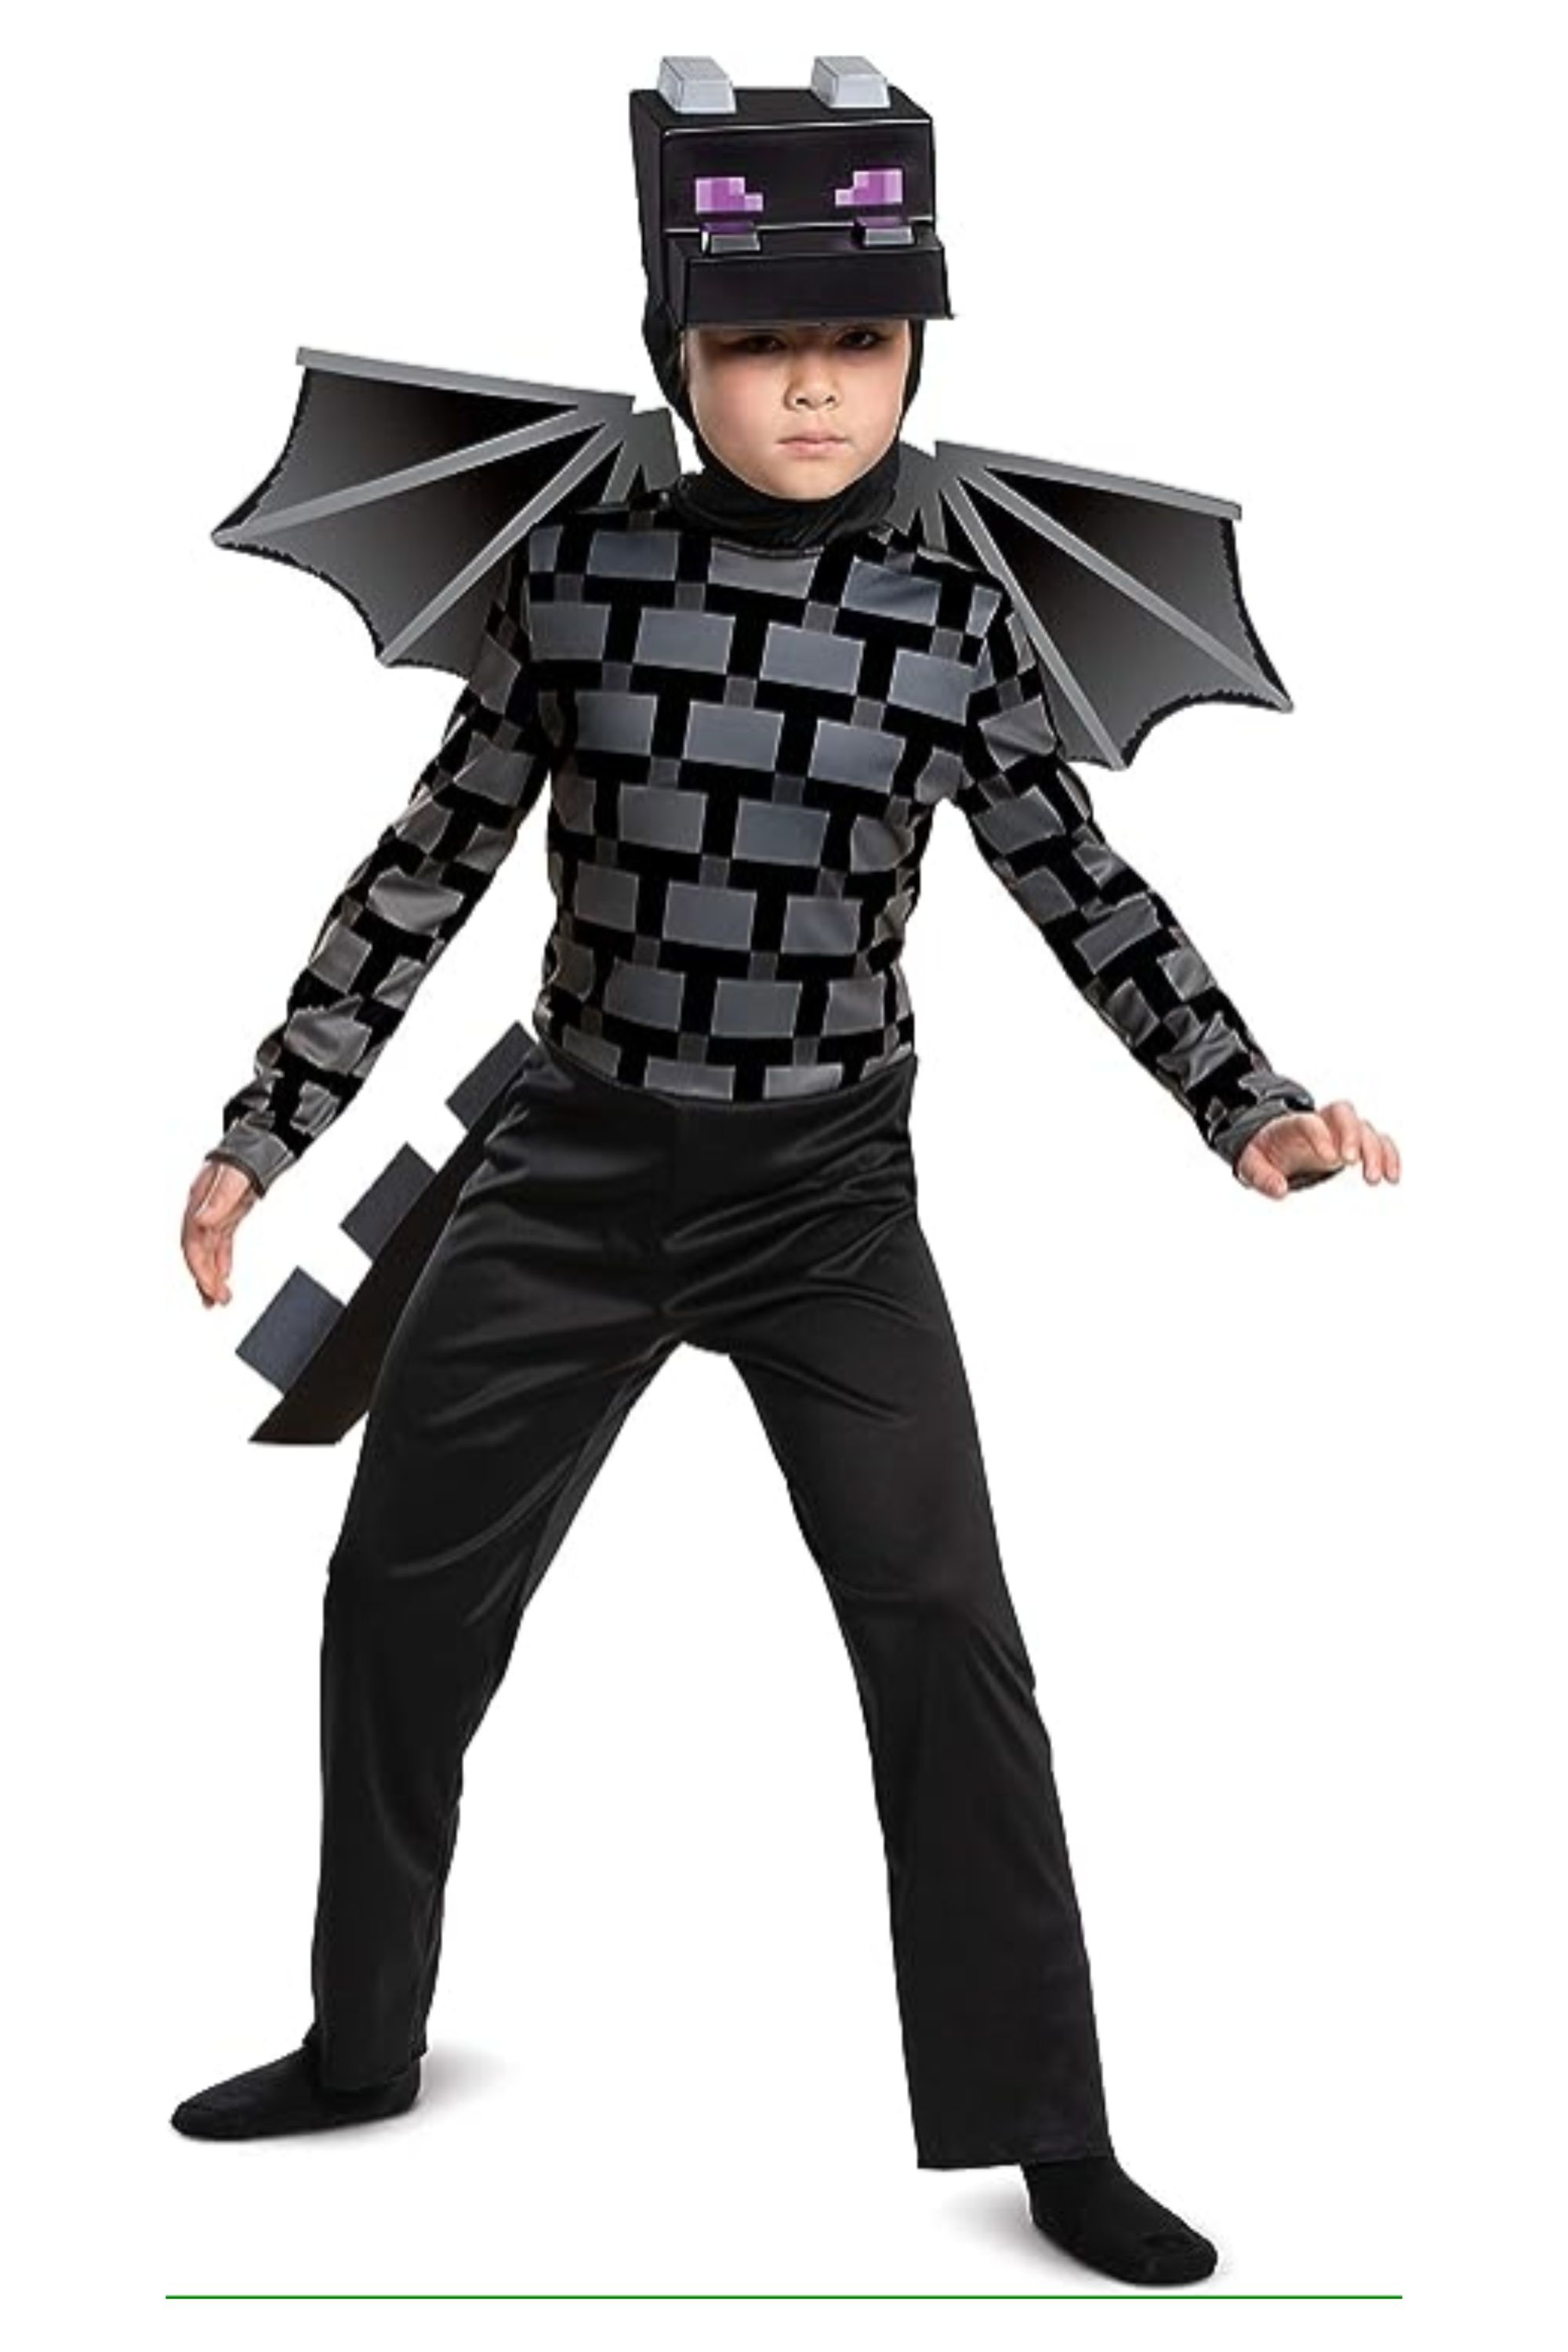 kid wearing a minecraft ender dragon costume